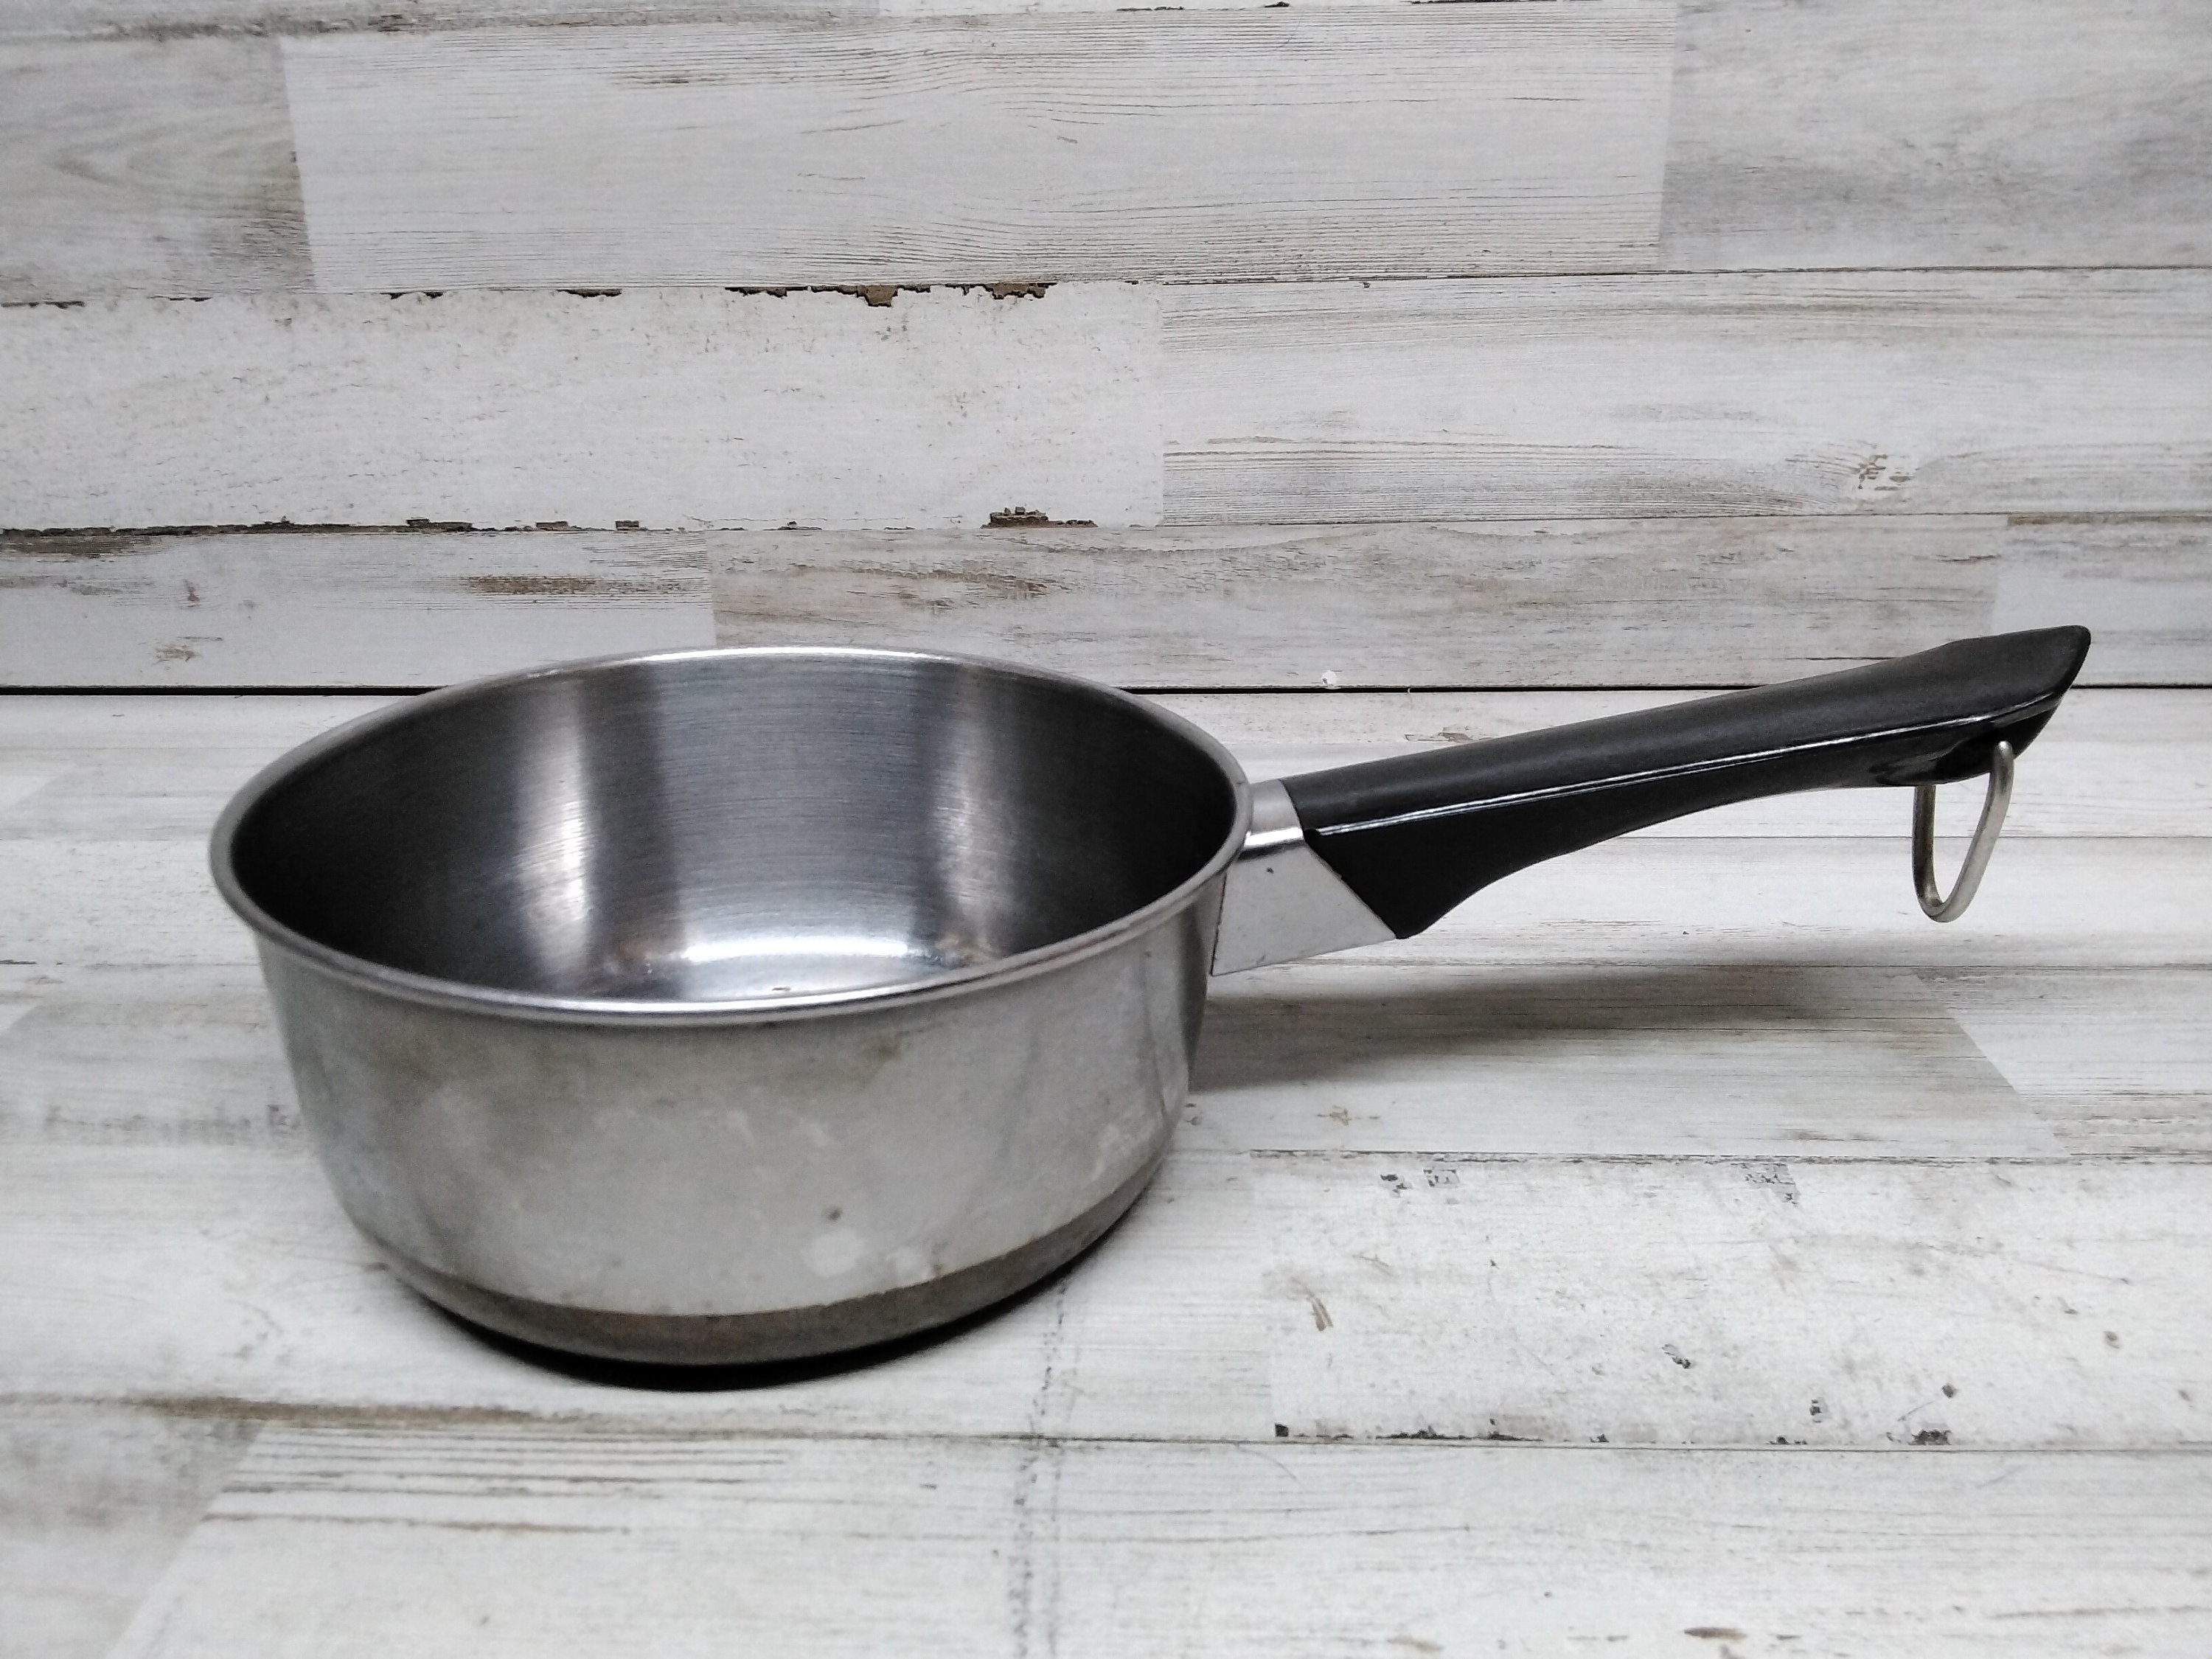 Vintage Small Stainless Steel Saucepan Made in Korea Korea Cookware / 2 Cup  Saucepan 